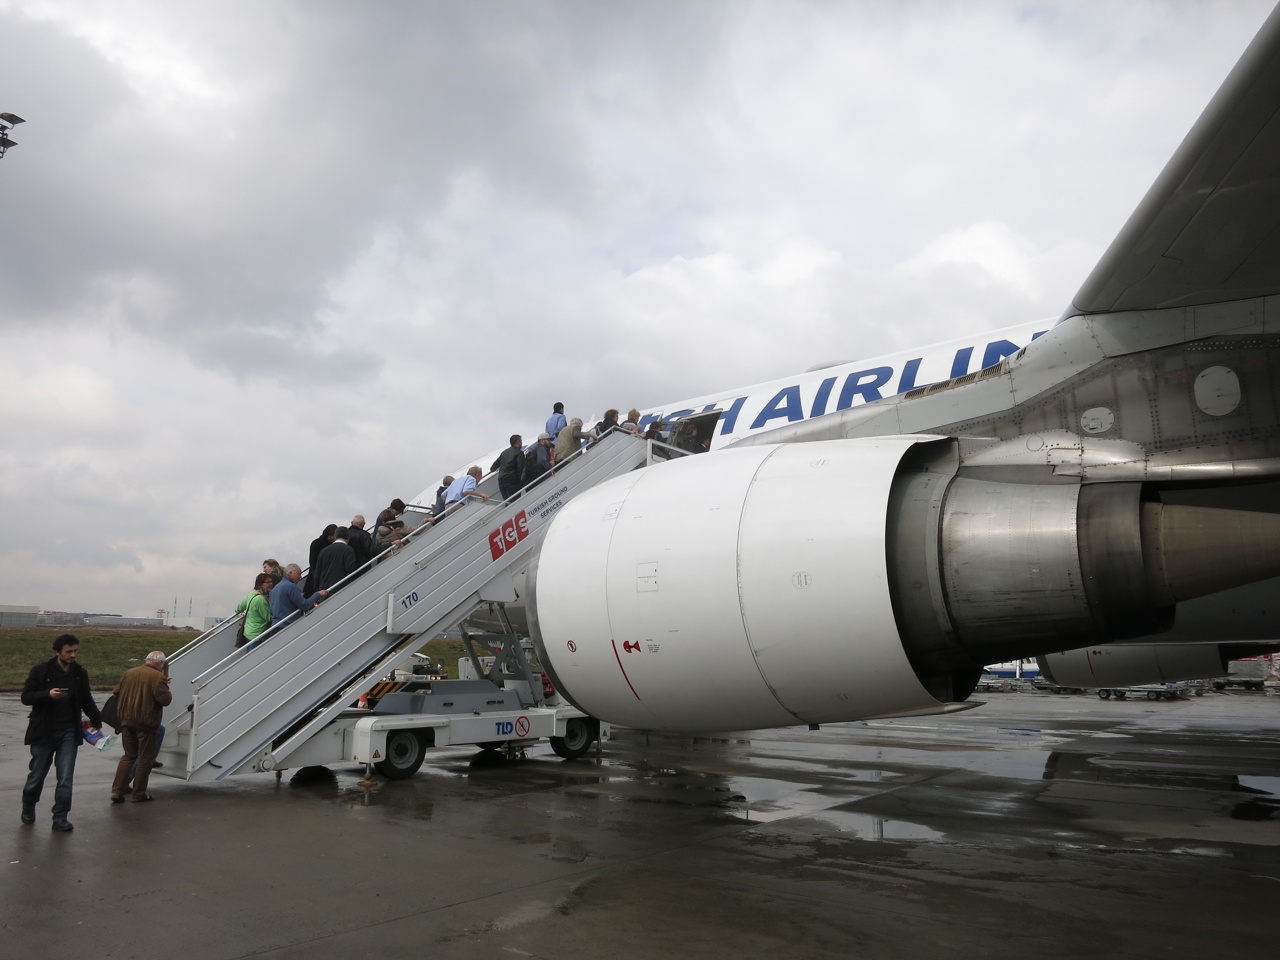 Turkish Airlines Economy class A330, - Jet Airways wet lease, 007.JPG